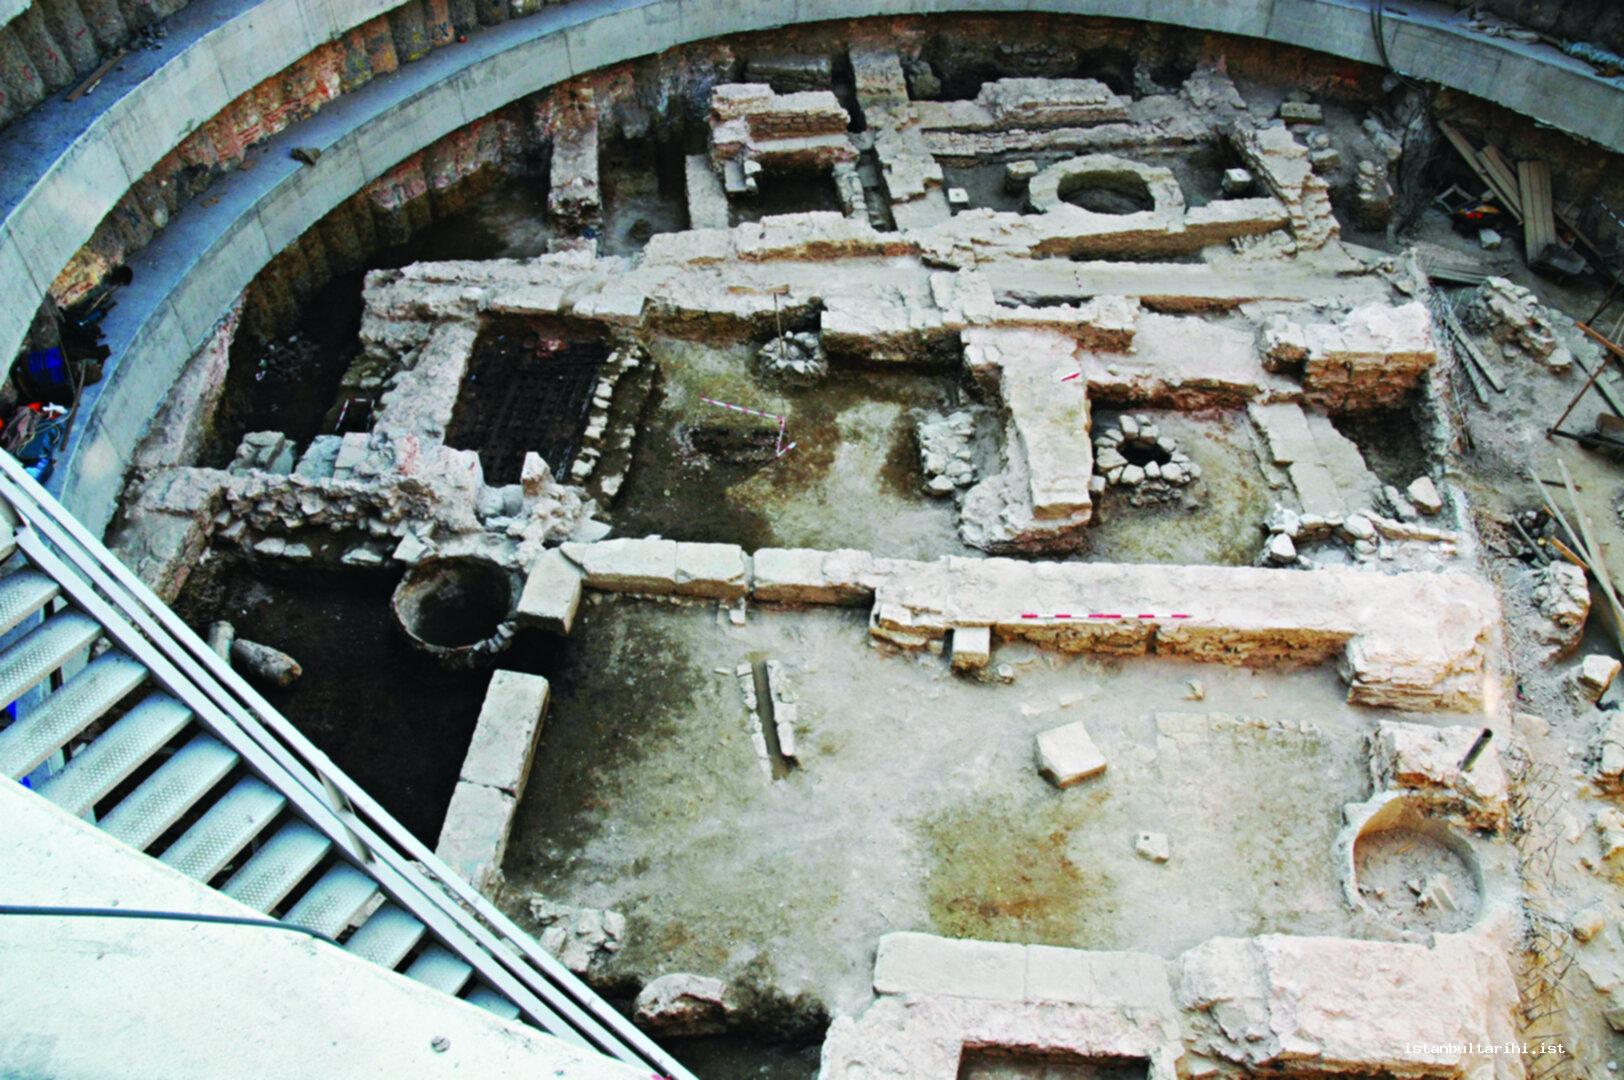 57- Hocapaşa, west shaft excavation area, Late Roman Early Byzantium remnants